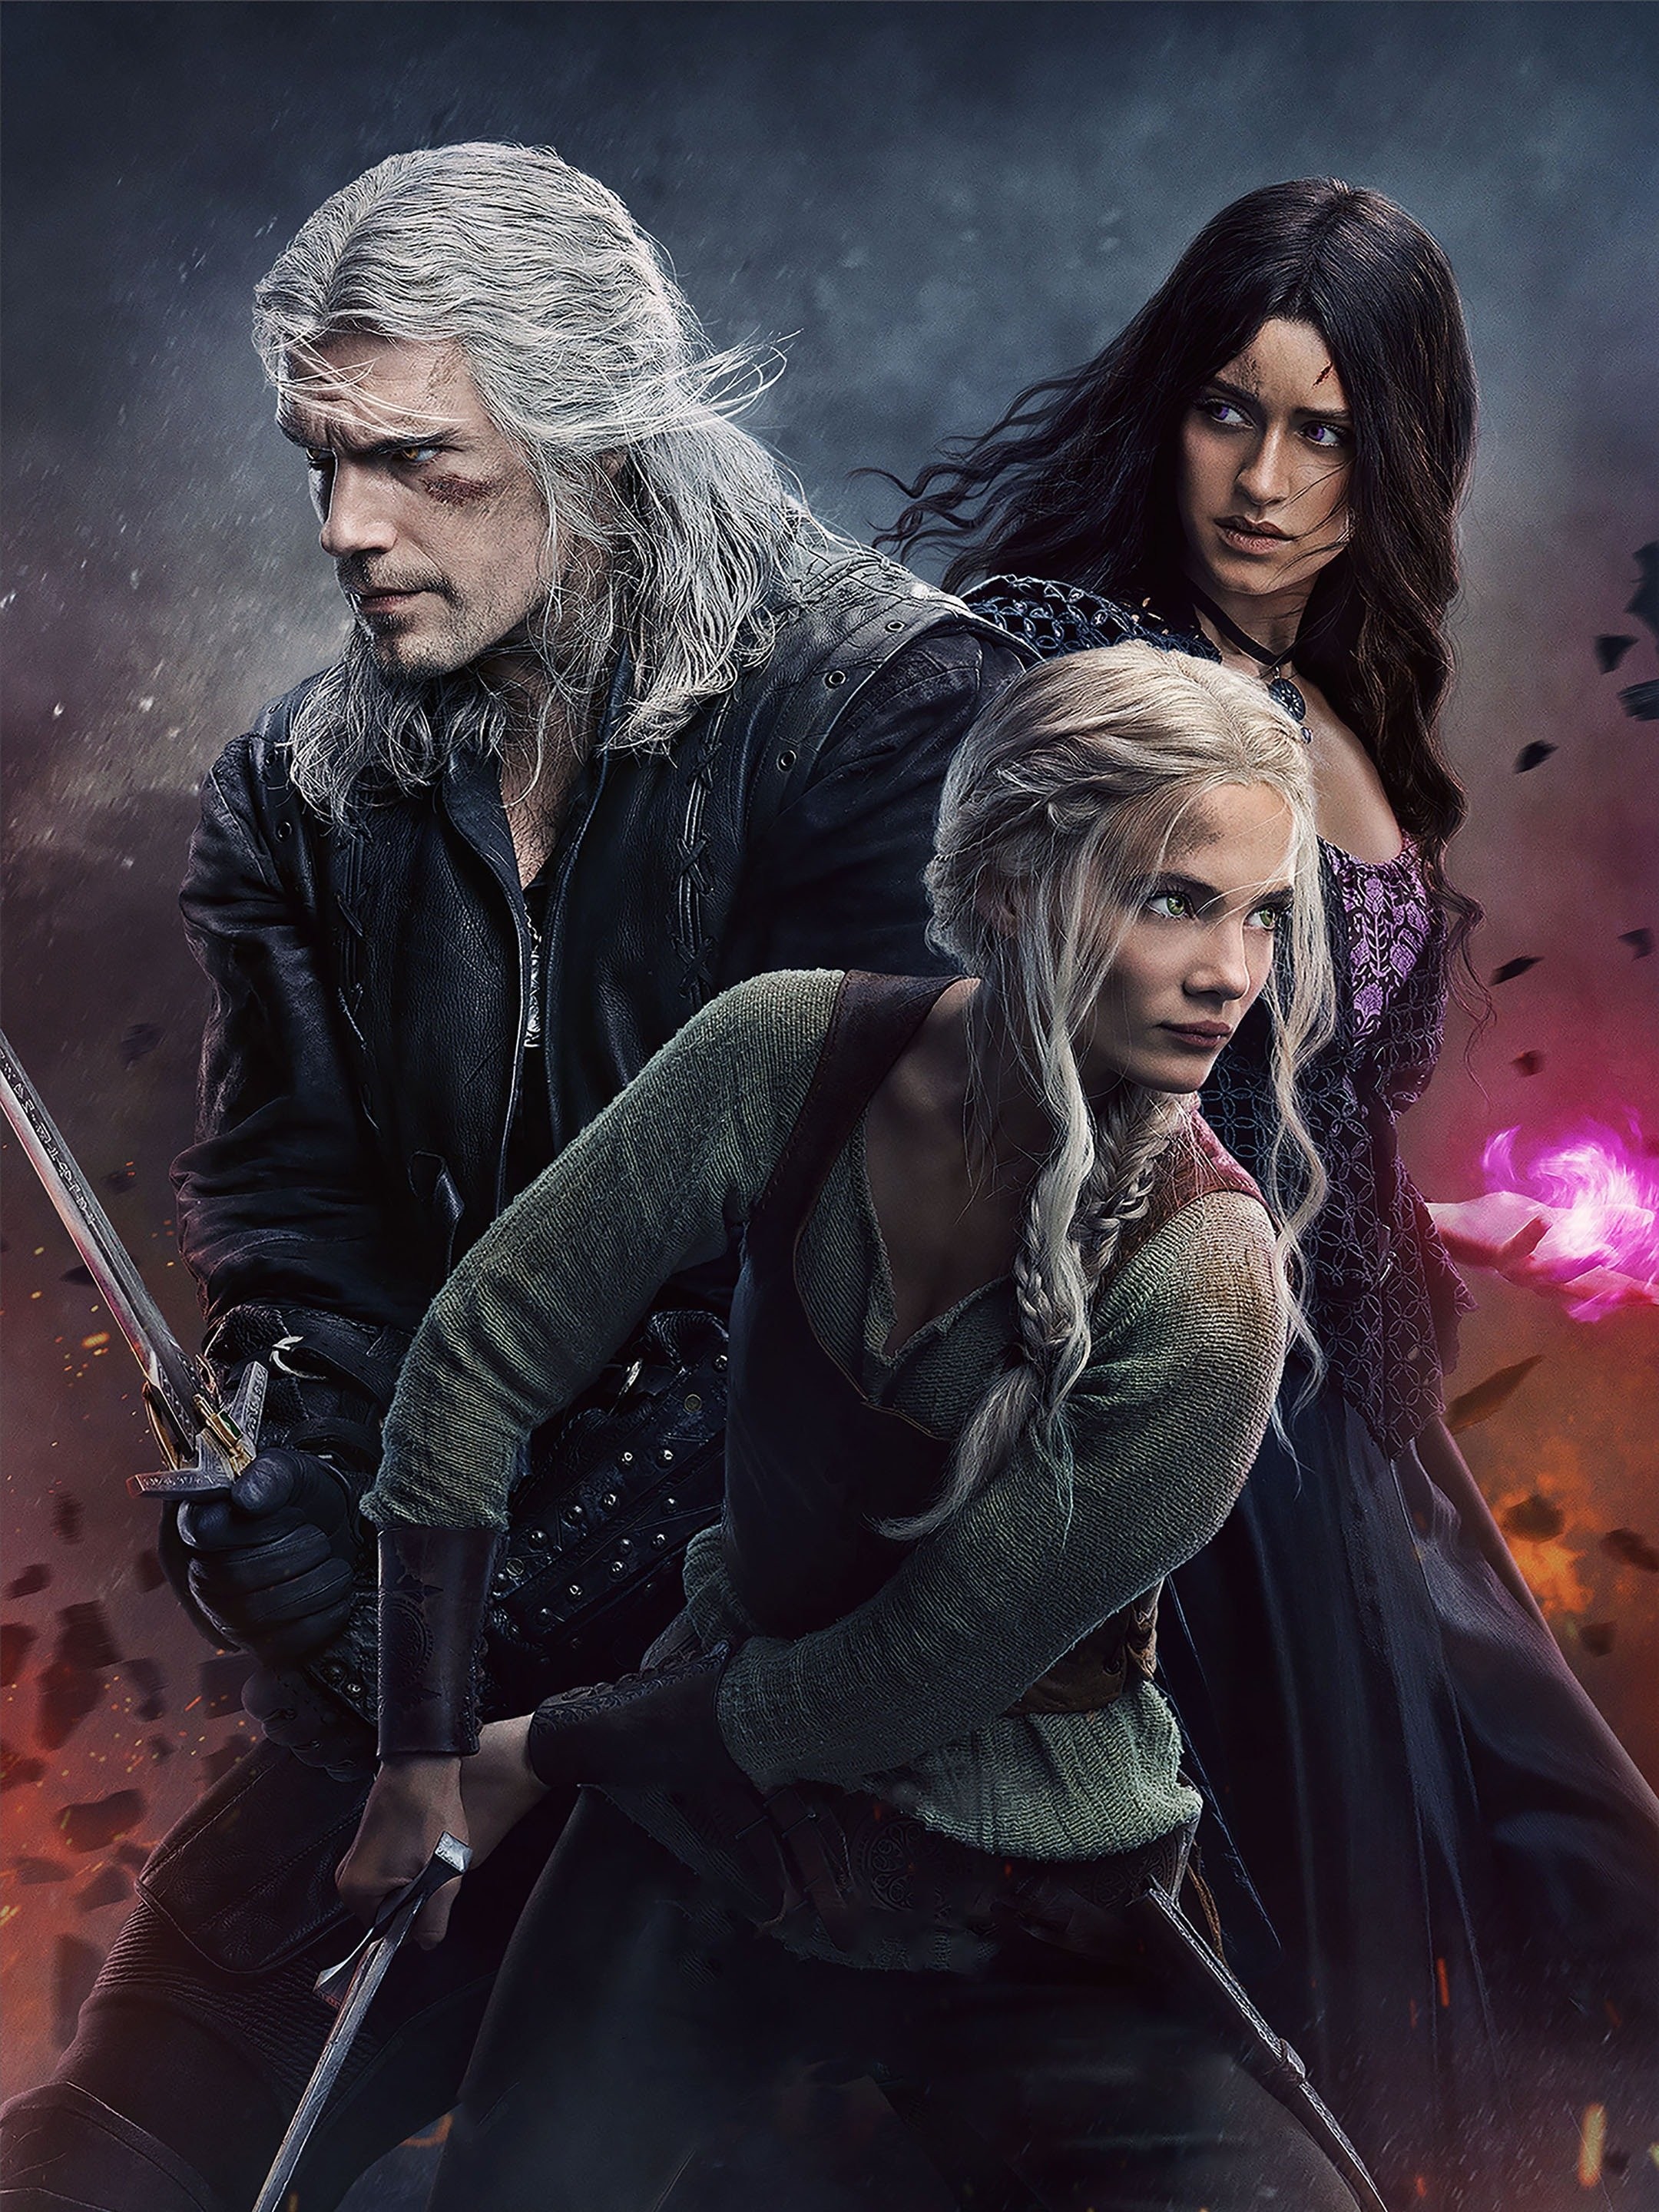 The Witcher season 2, trailer, plot, storyline, release date, cast, actors,  and premier